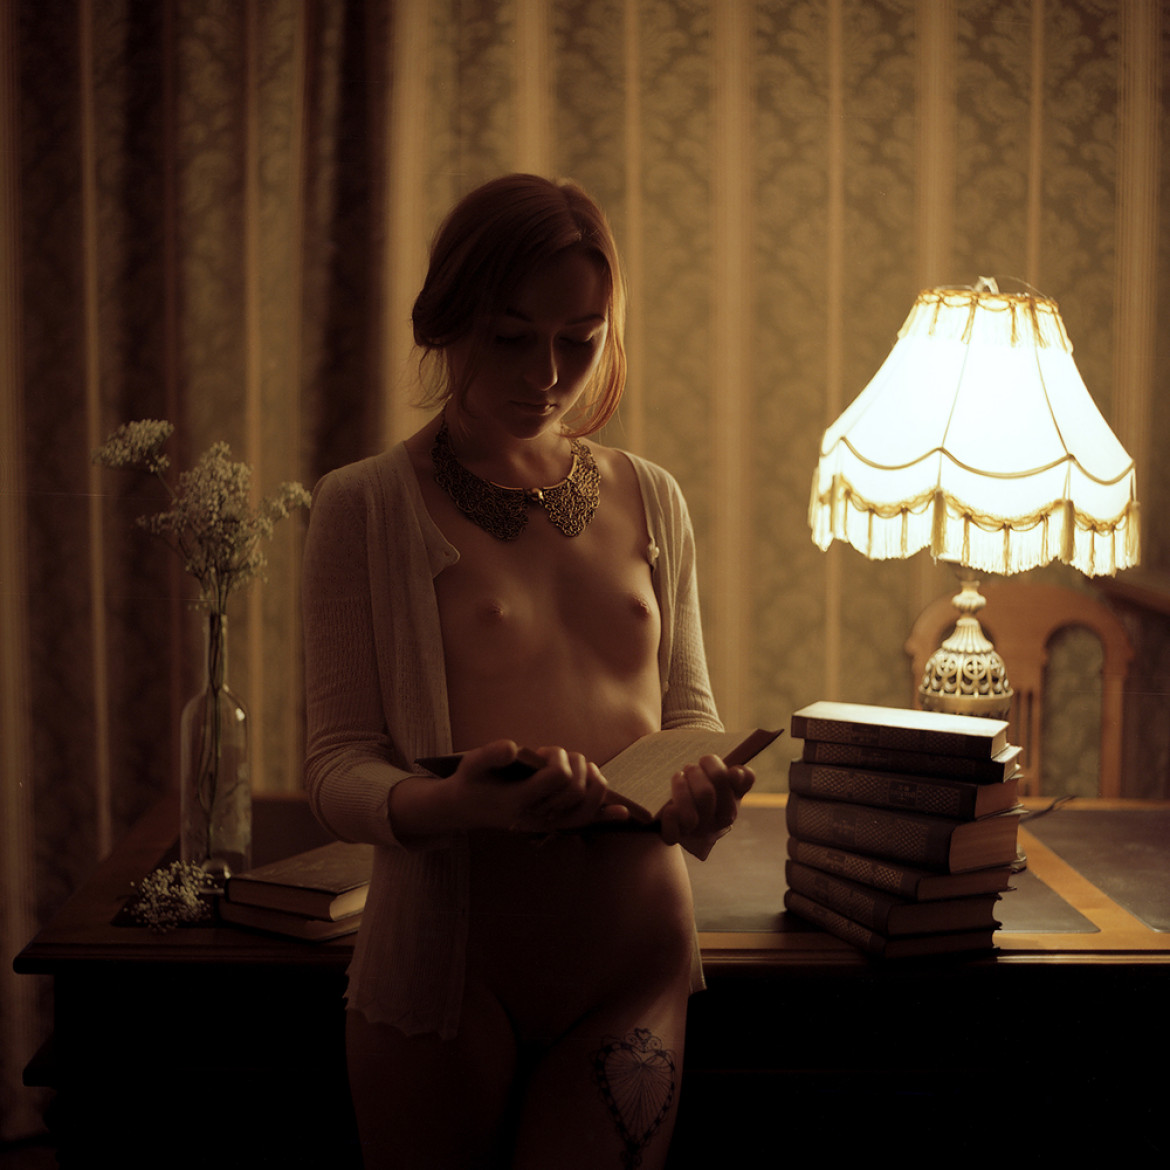 fot. Roman Suslenko, 3. nagroda w amatorskiej kategorii Nude / Fine Art Photography Awards 2020